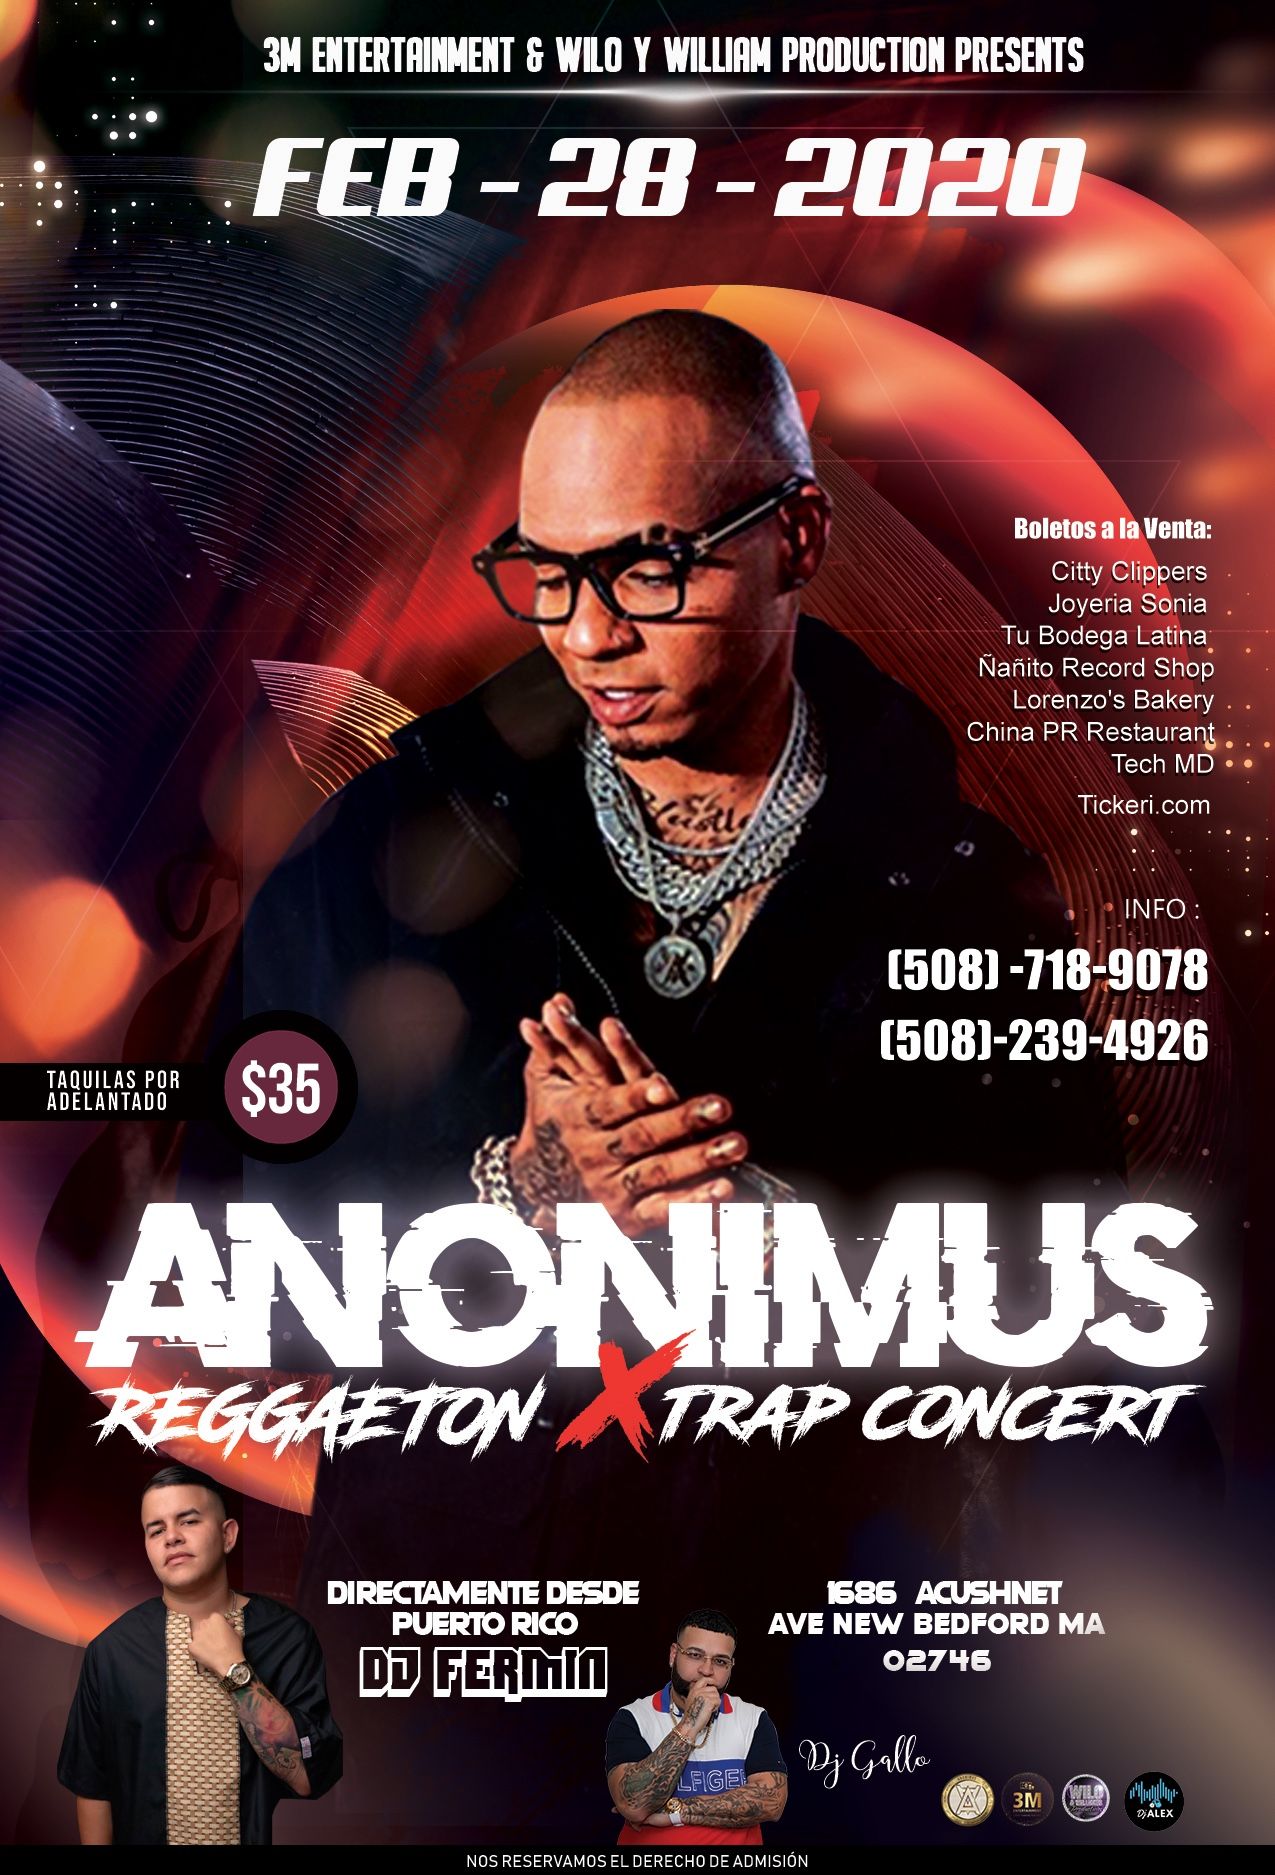 Reggaeton x trap concert con Anonimus y DJ Fermin